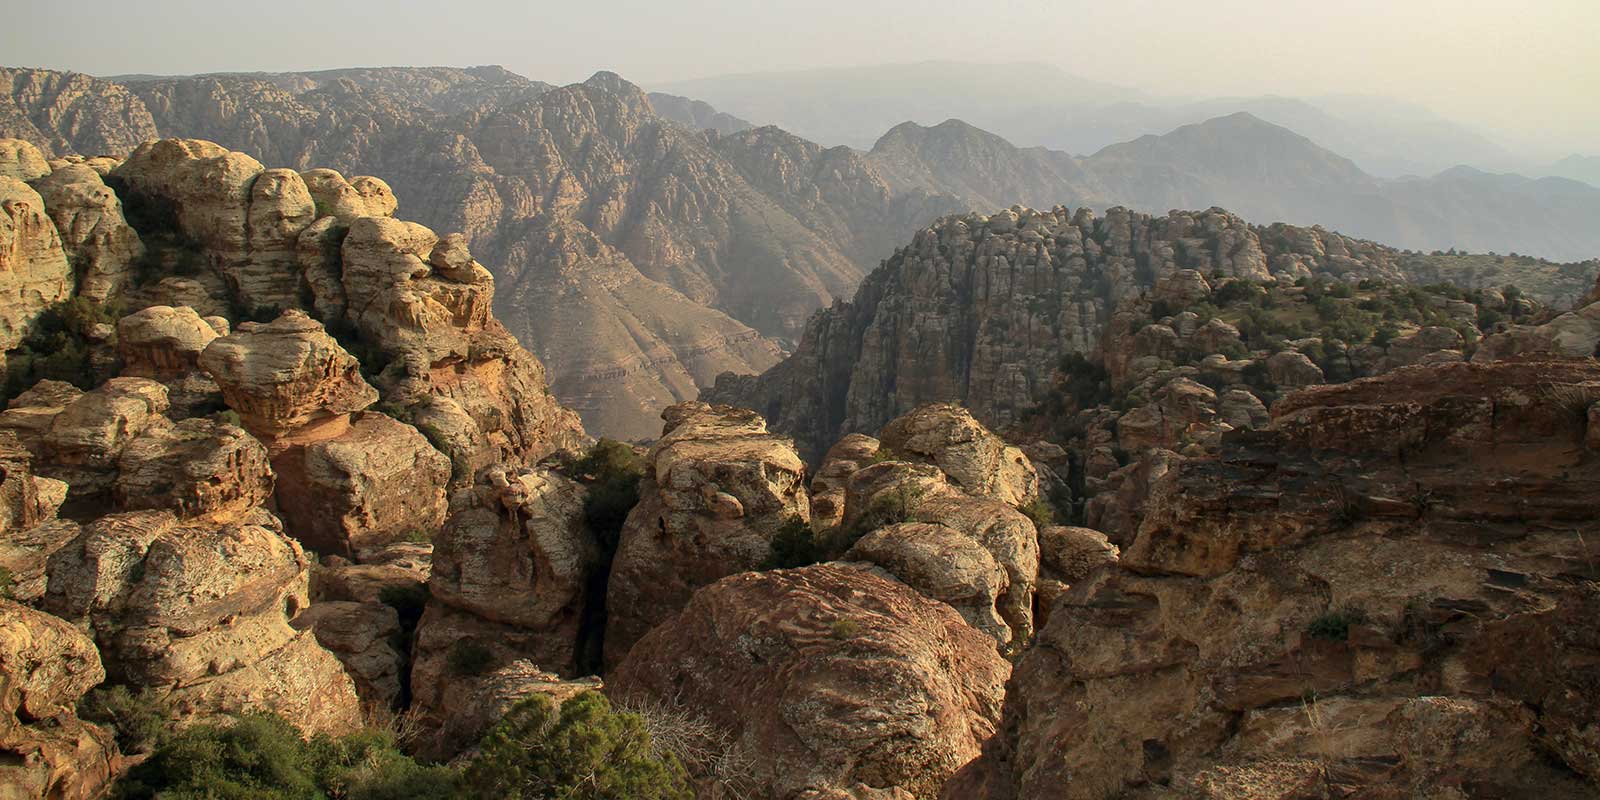 Dana biosphere mountains in Jordan